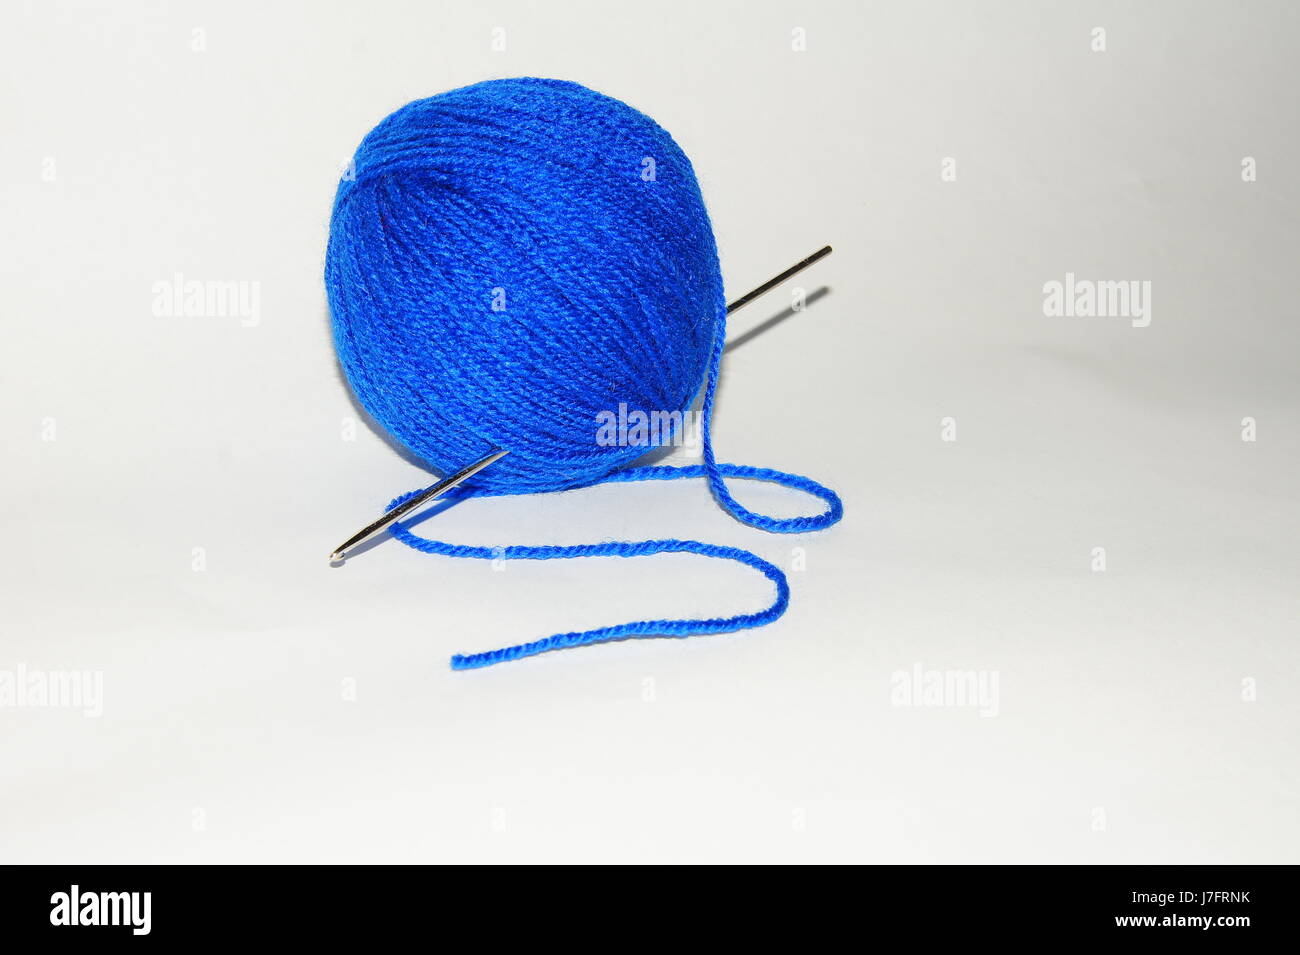 Artesanía de lana azul bola de lana de lana hilos de rosca azul desenrollado de artesanía Foto de stock